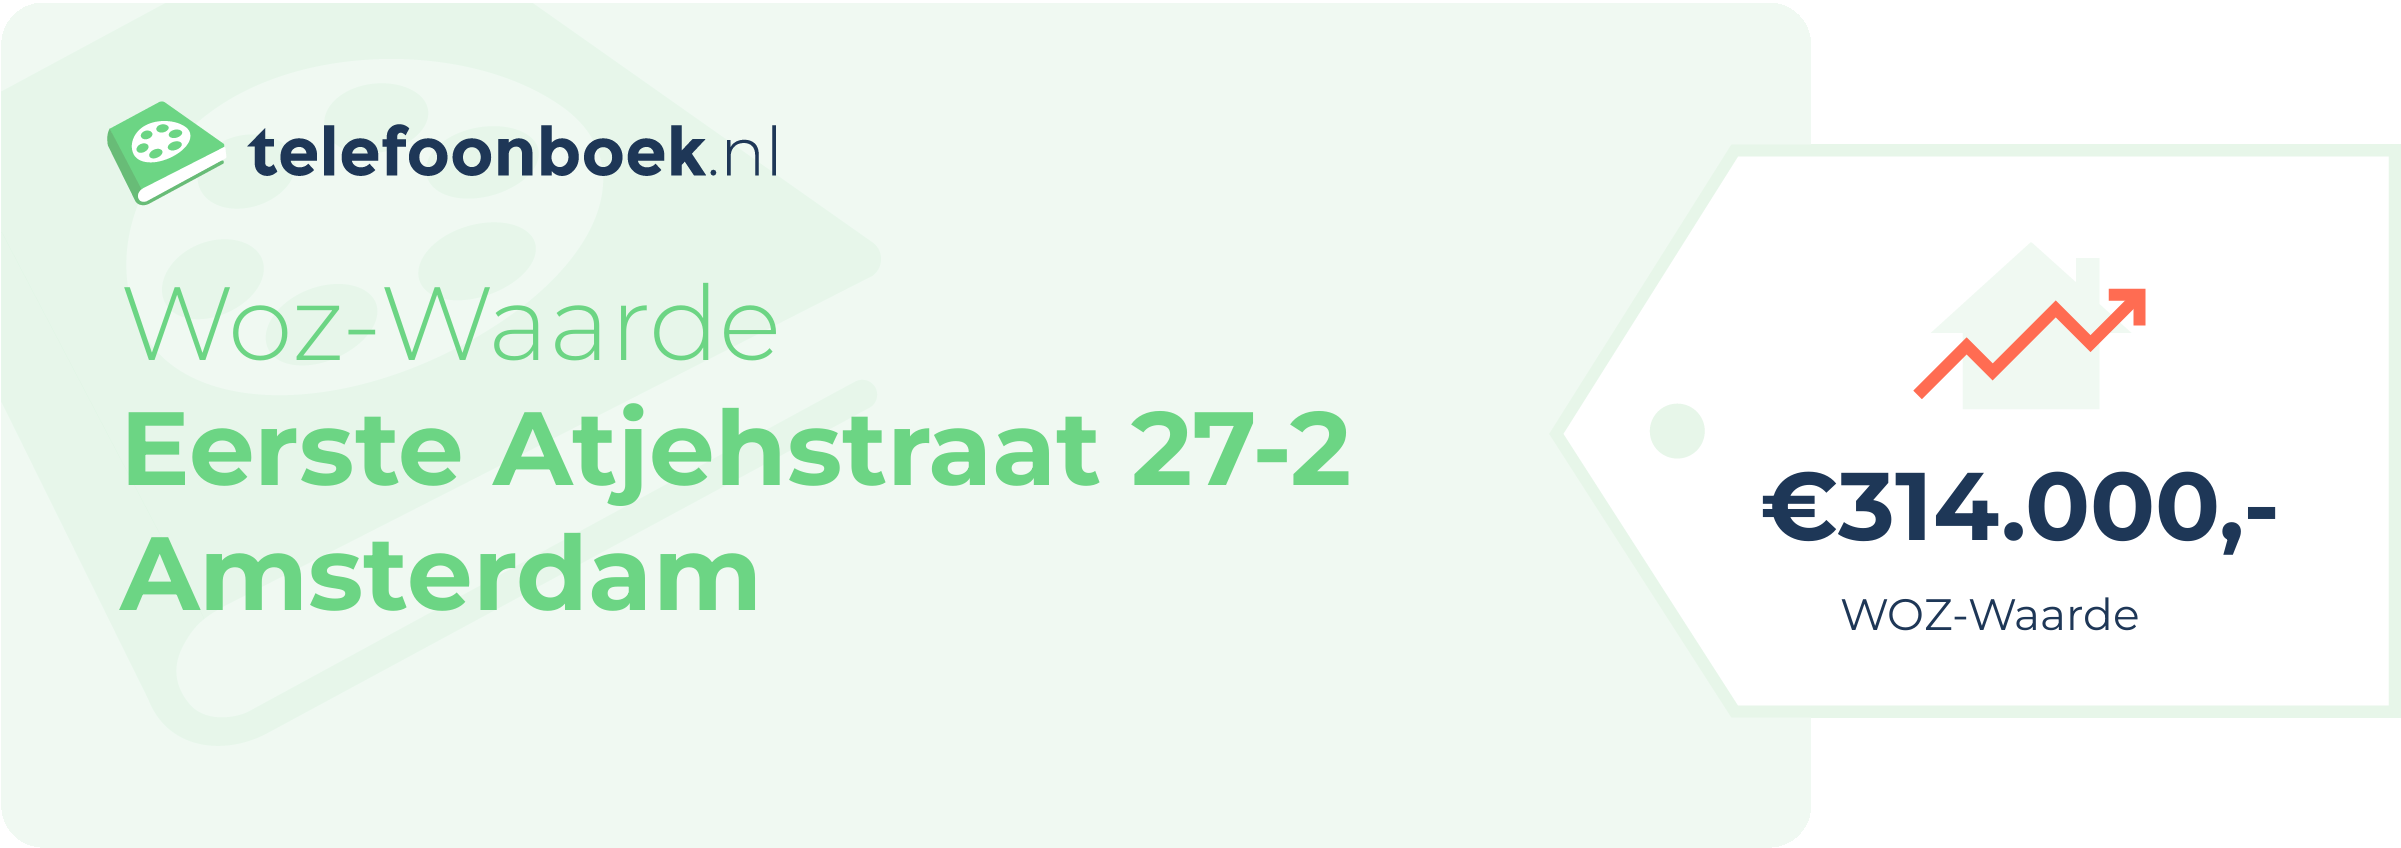 WOZ-waarde Eerste Atjehstraat 27-2 Amsterdam